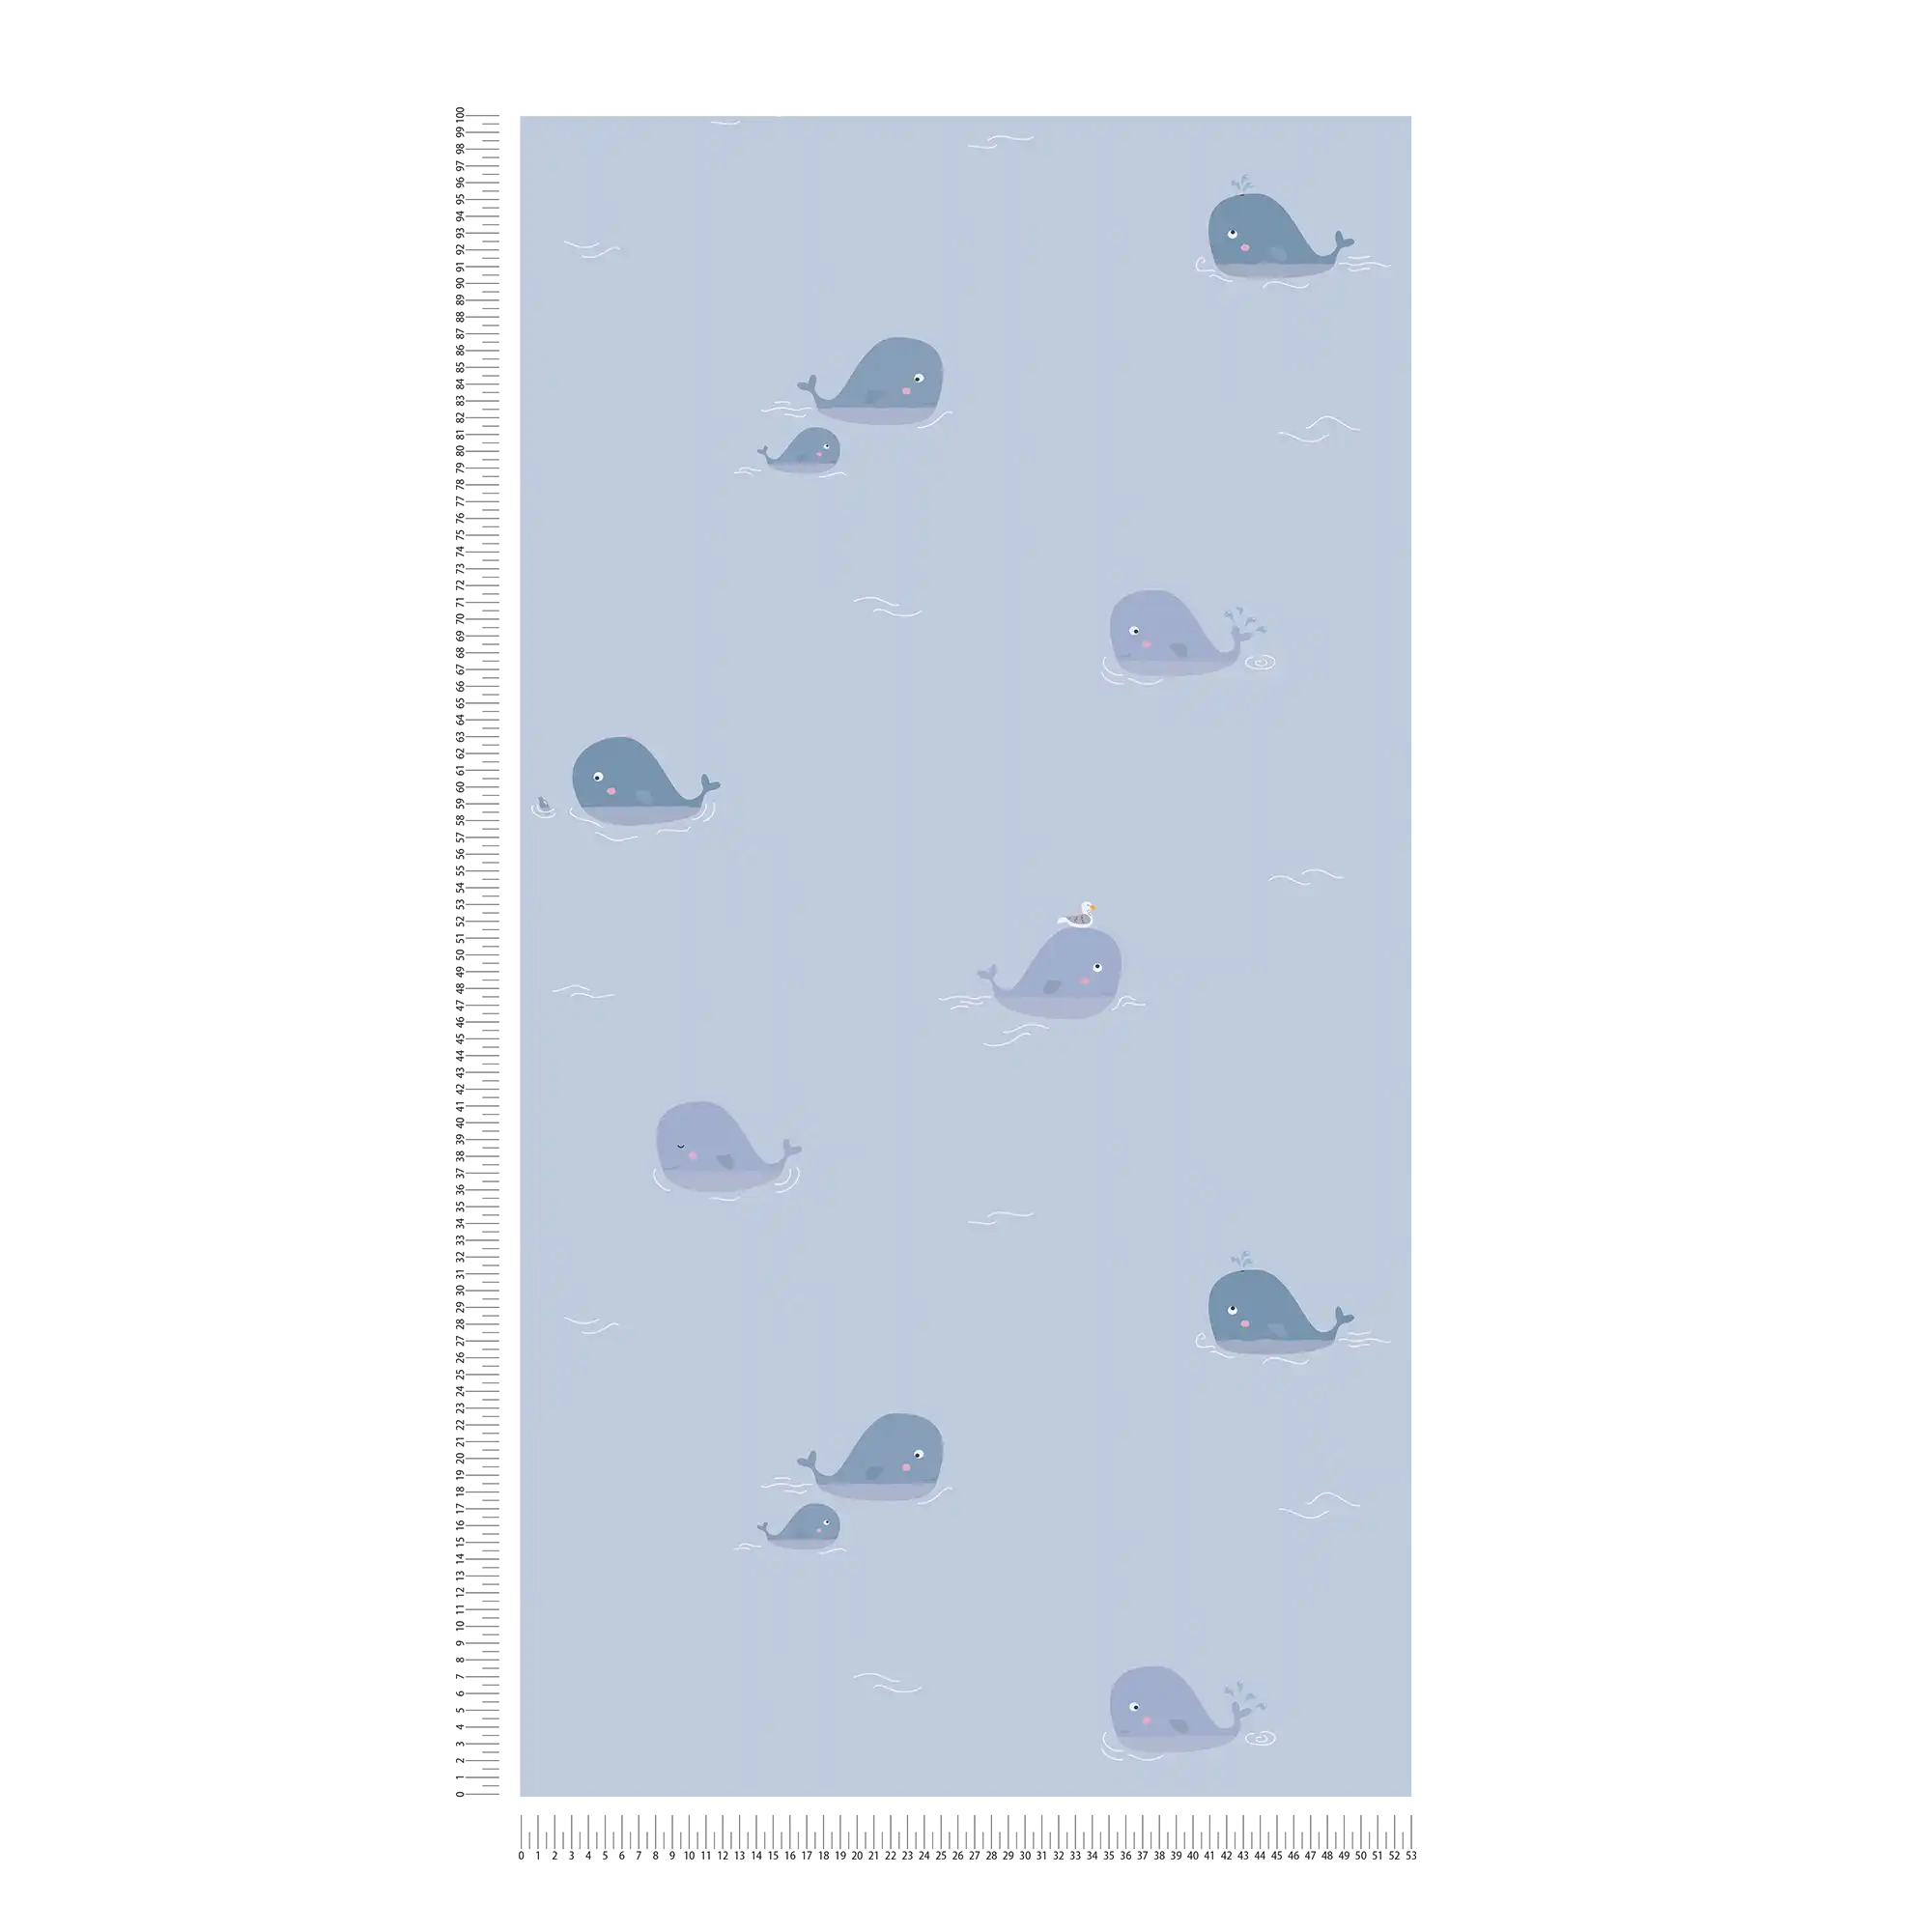             Kinderzimmer Jungen Tapete Wale – Blau, Grau, Weiß
        